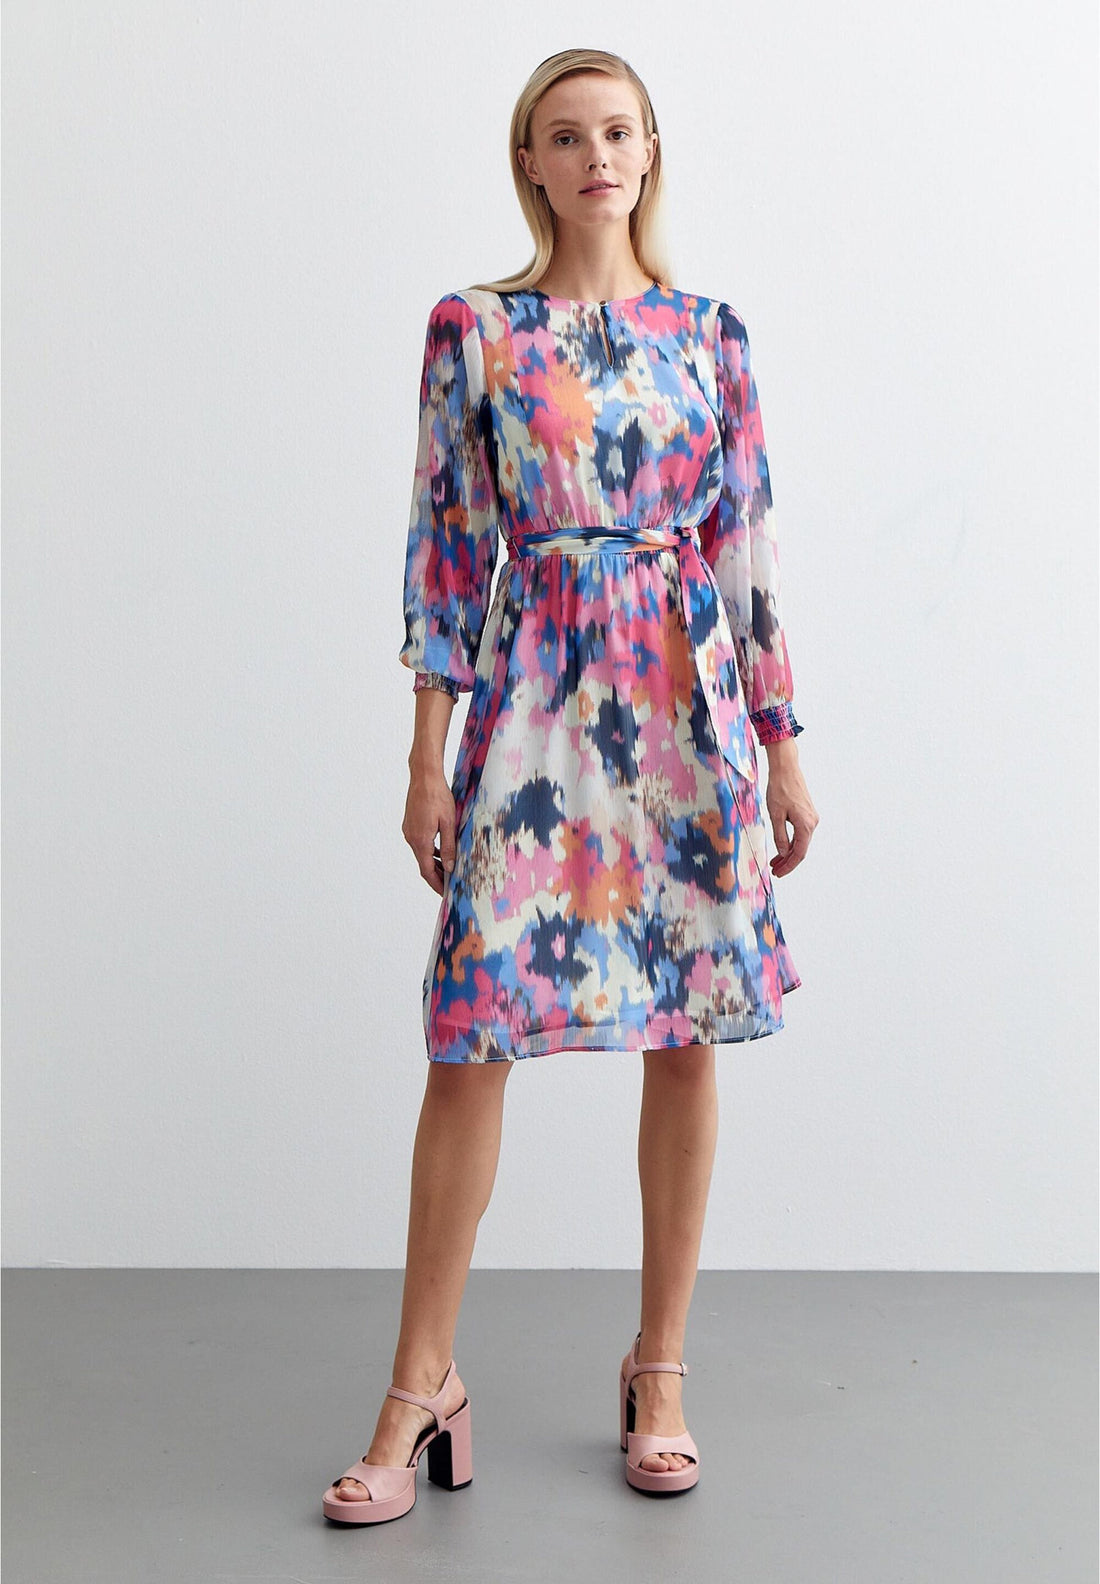 Chiffon Dress With Abstract Print_41023053_4345_01